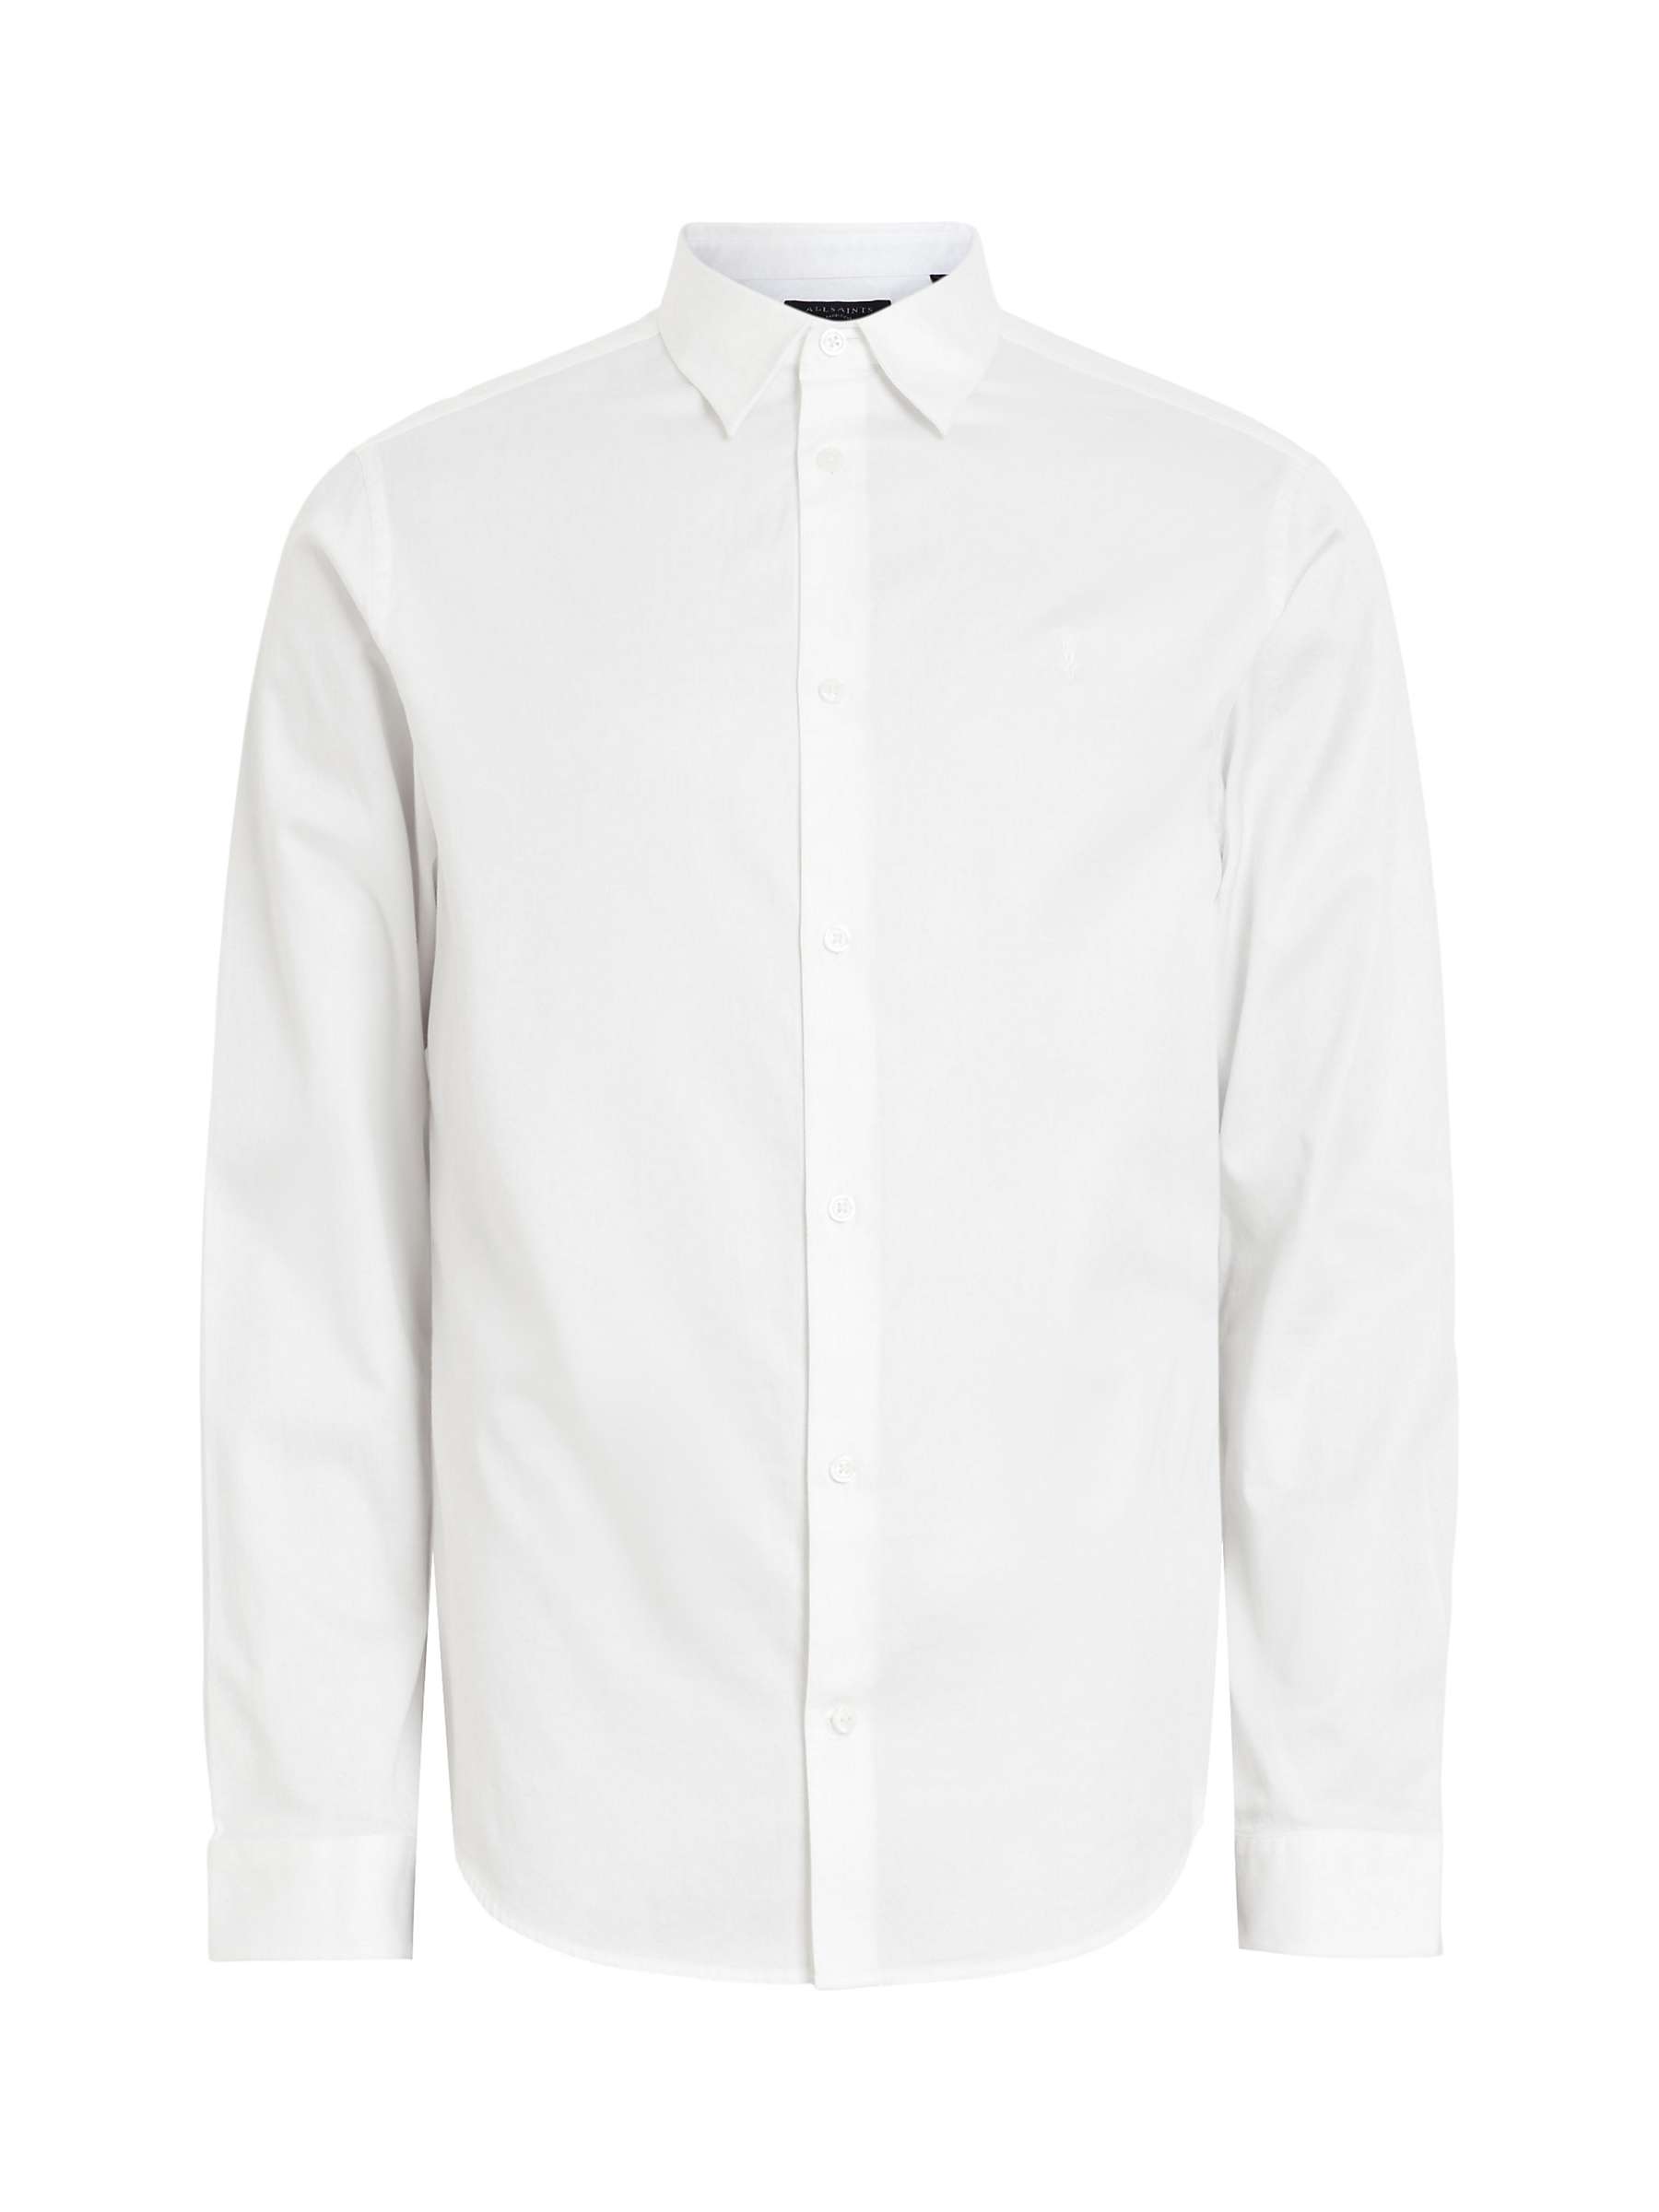 Buy AllSaints Simmons Long Sleeve Shirt Online at johnlewis.com